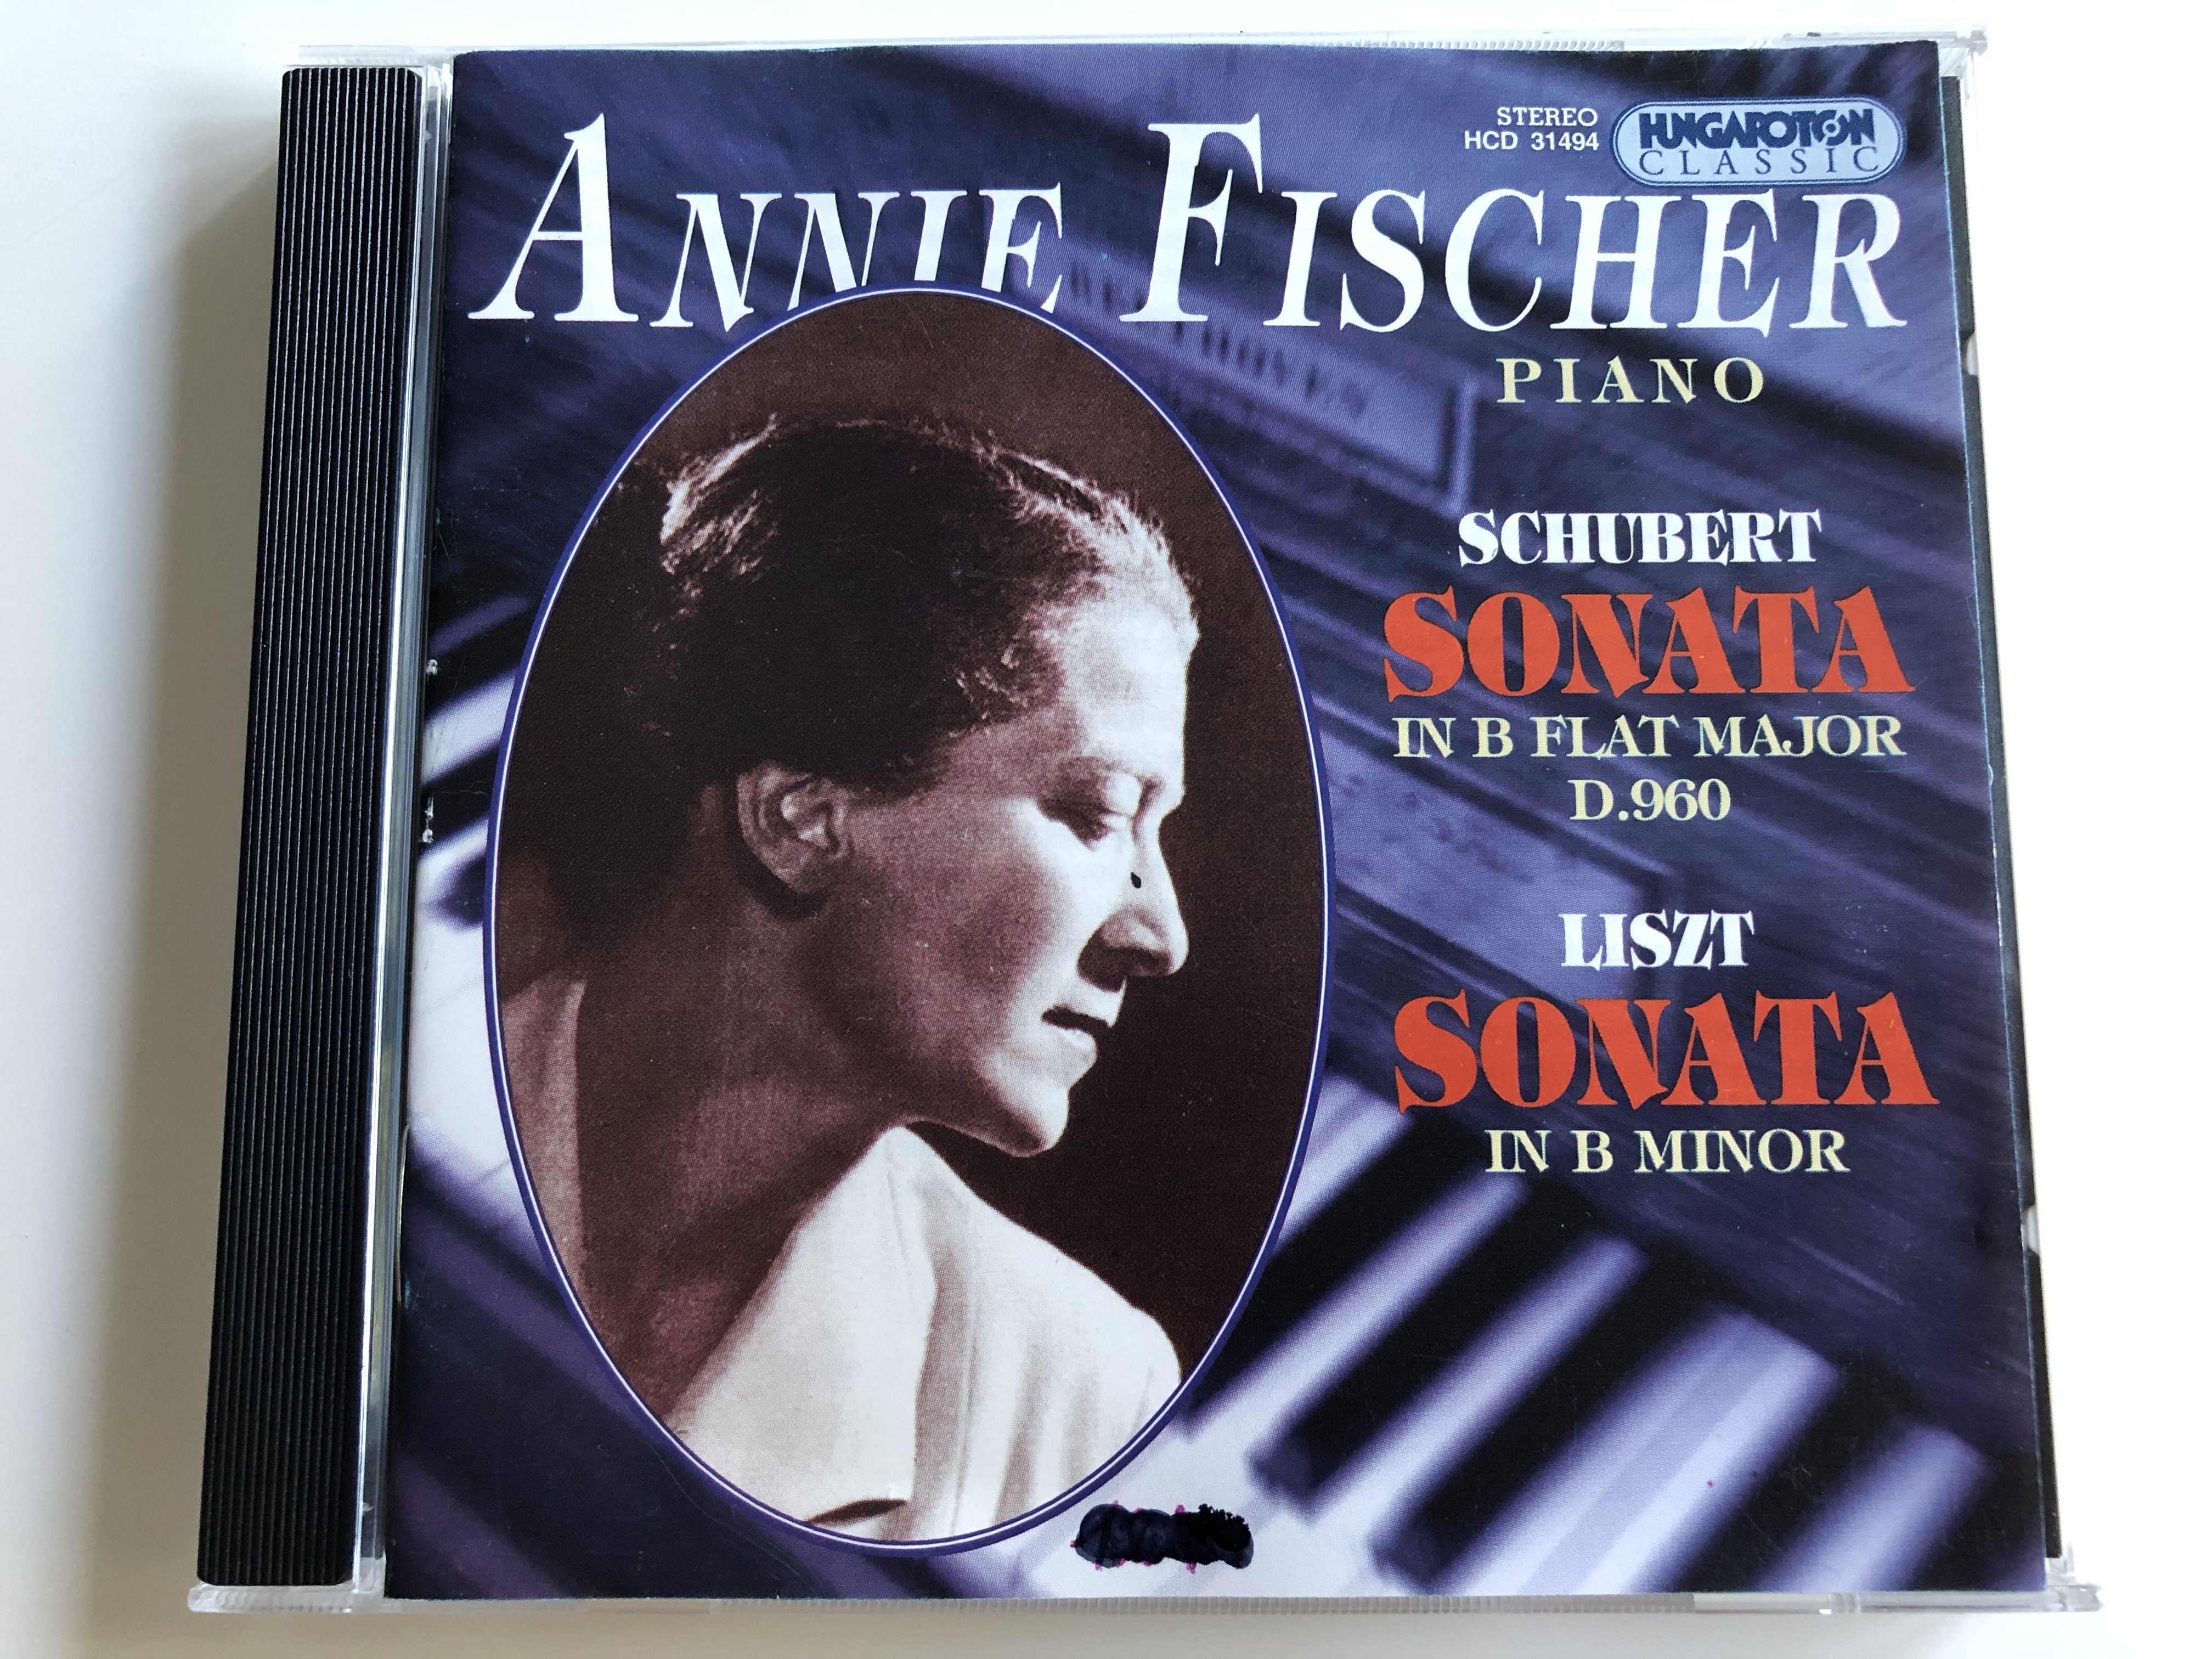 schubert-sonata-in-b-flat-major-d.960-liszt-sonata-in-b-minor-annie-fischer-piano-hungaroton-classic-audio-cd-1995-hcd-31494-1-.jpg